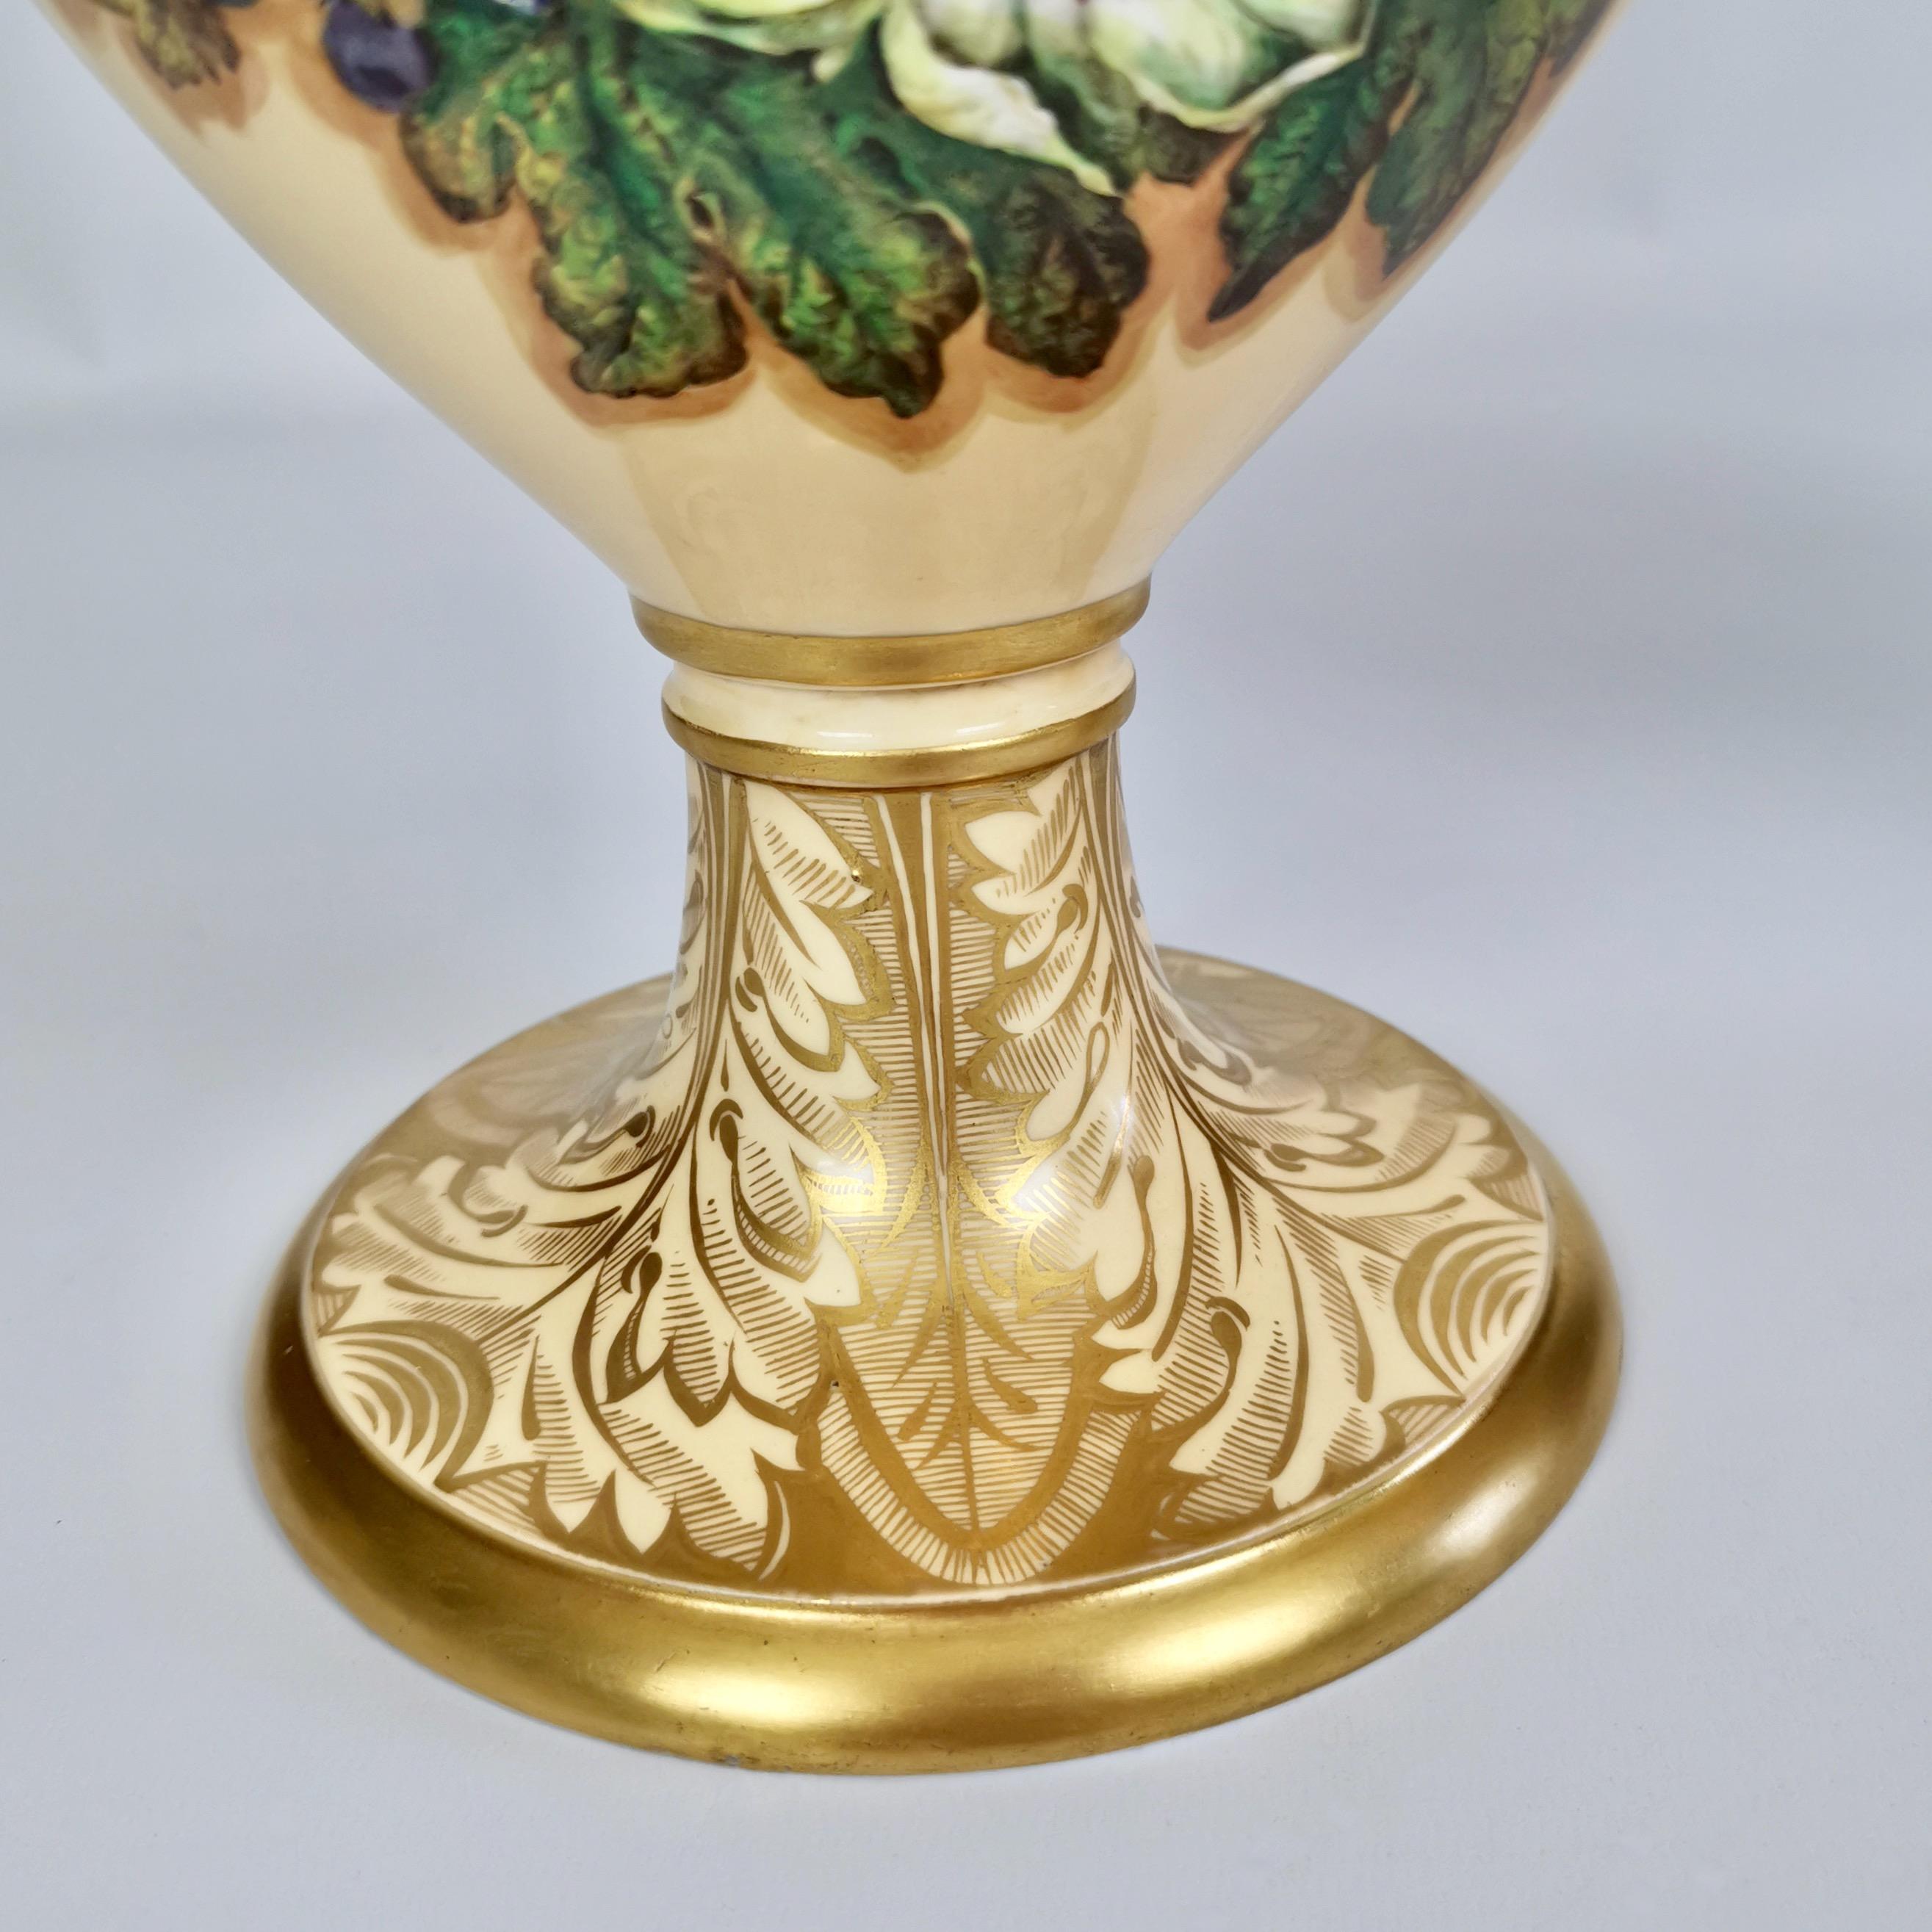 Copeland & Garrett Porcelain Vases, Flowers and Fruits, Rococo Revival 1833-1847 8